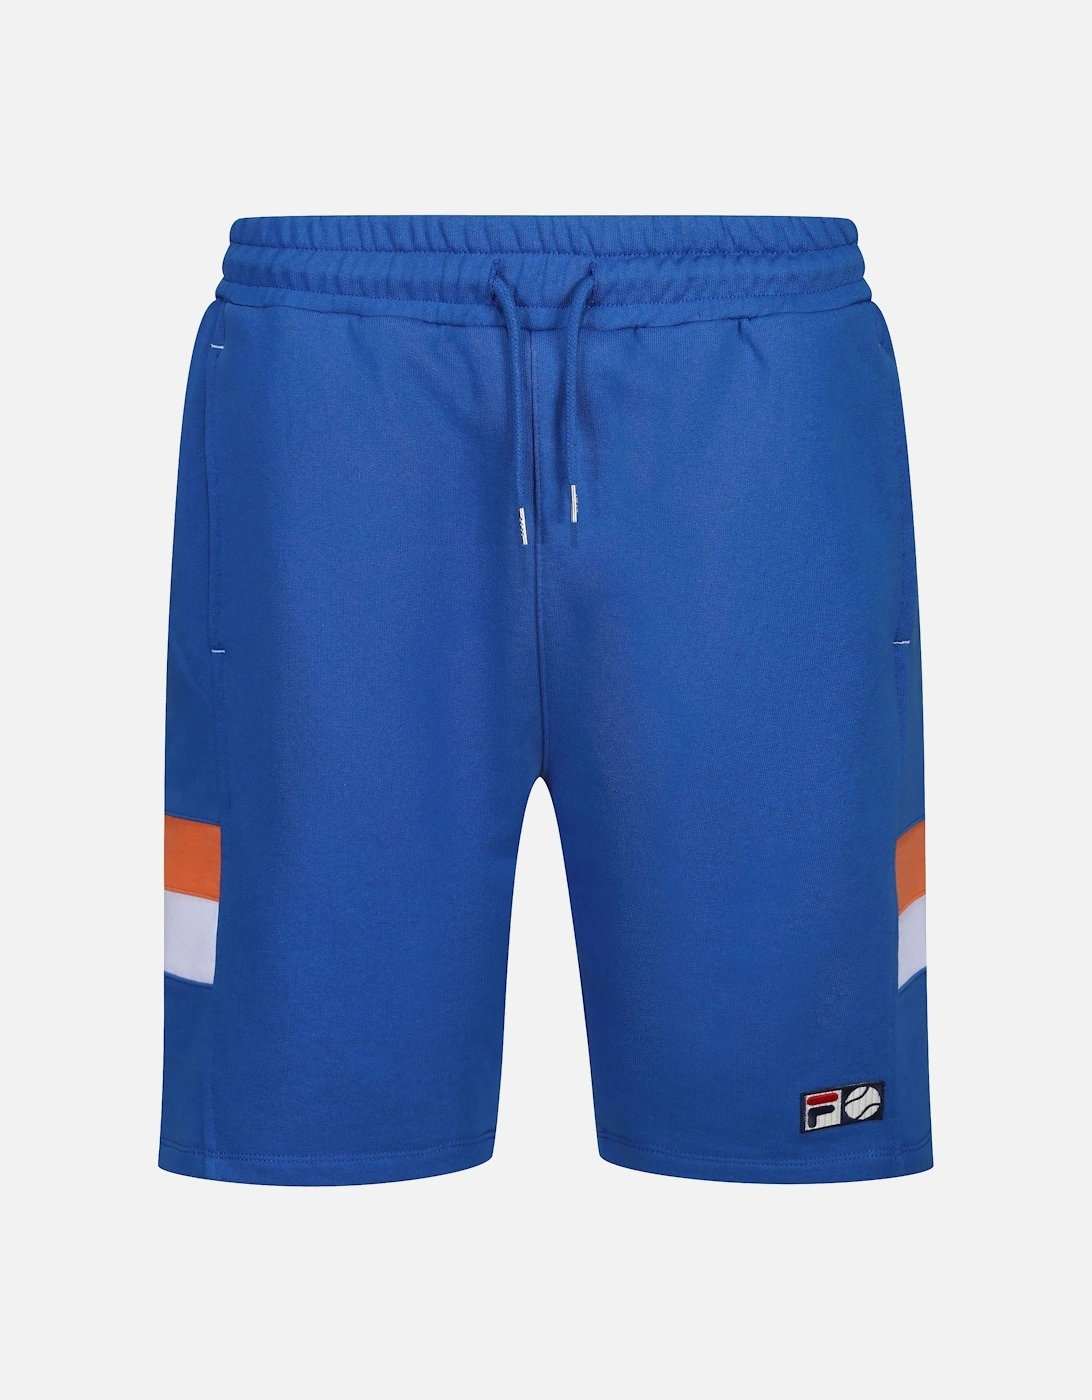 Fila Men's Langlen Stripe Detail Mens Fleece Tennis Shorts | Strong Blue - Size: 36